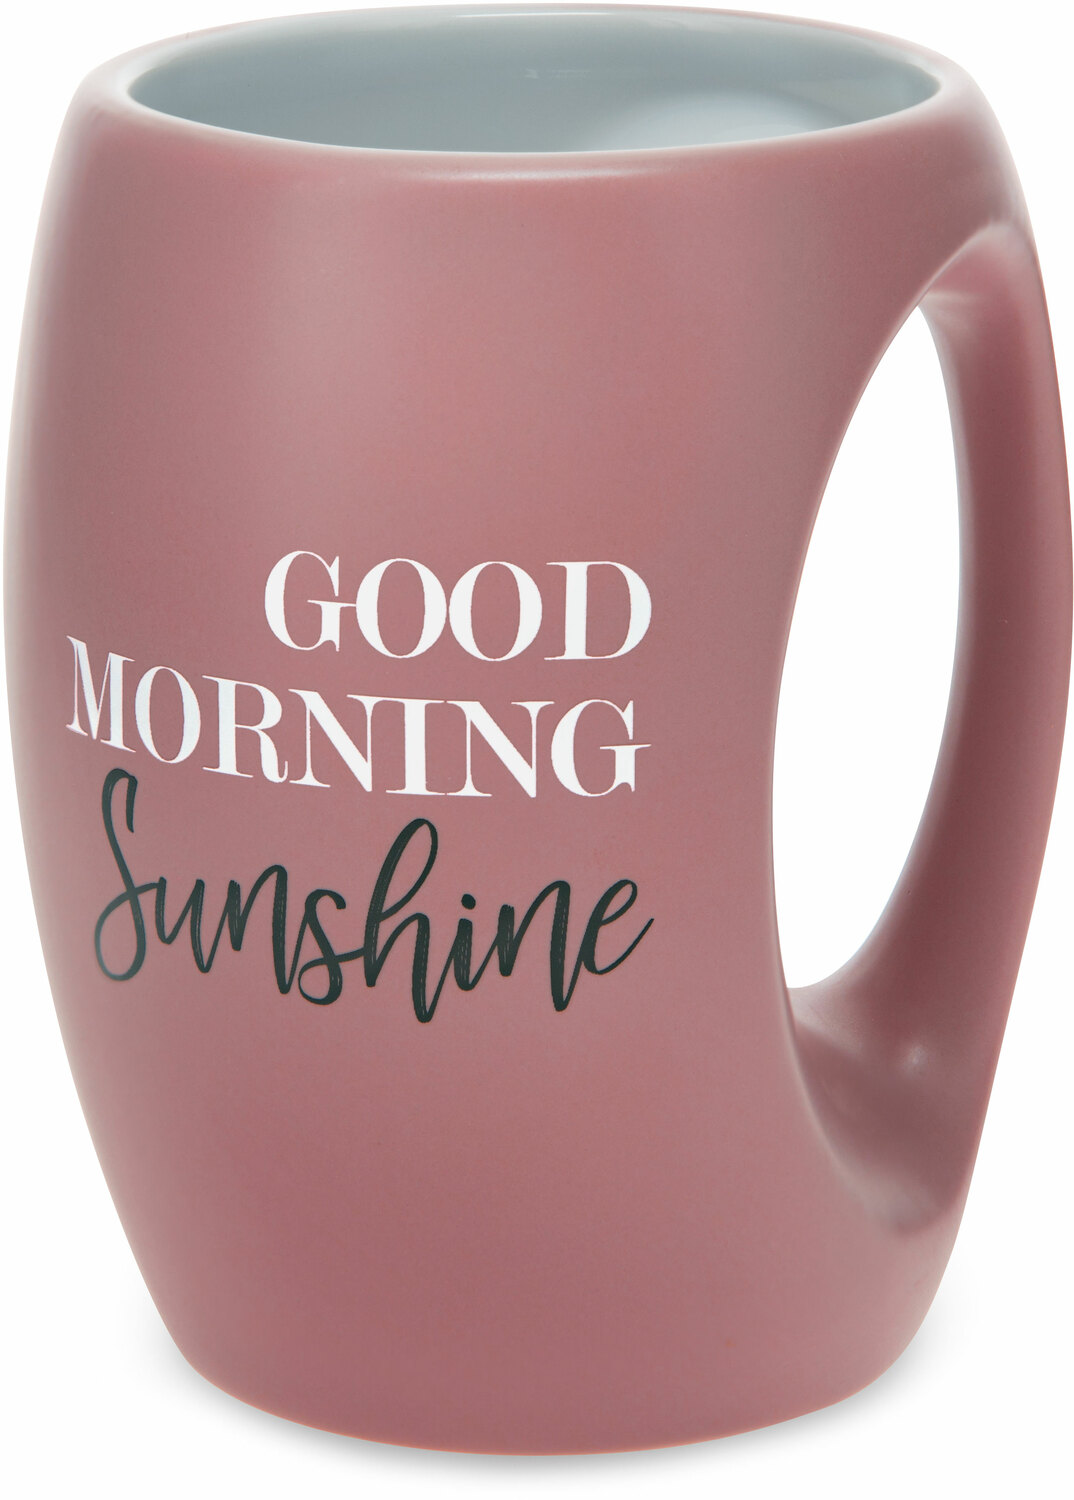 Sunshine by Good Morning - Sunshine - 16 oz Cup